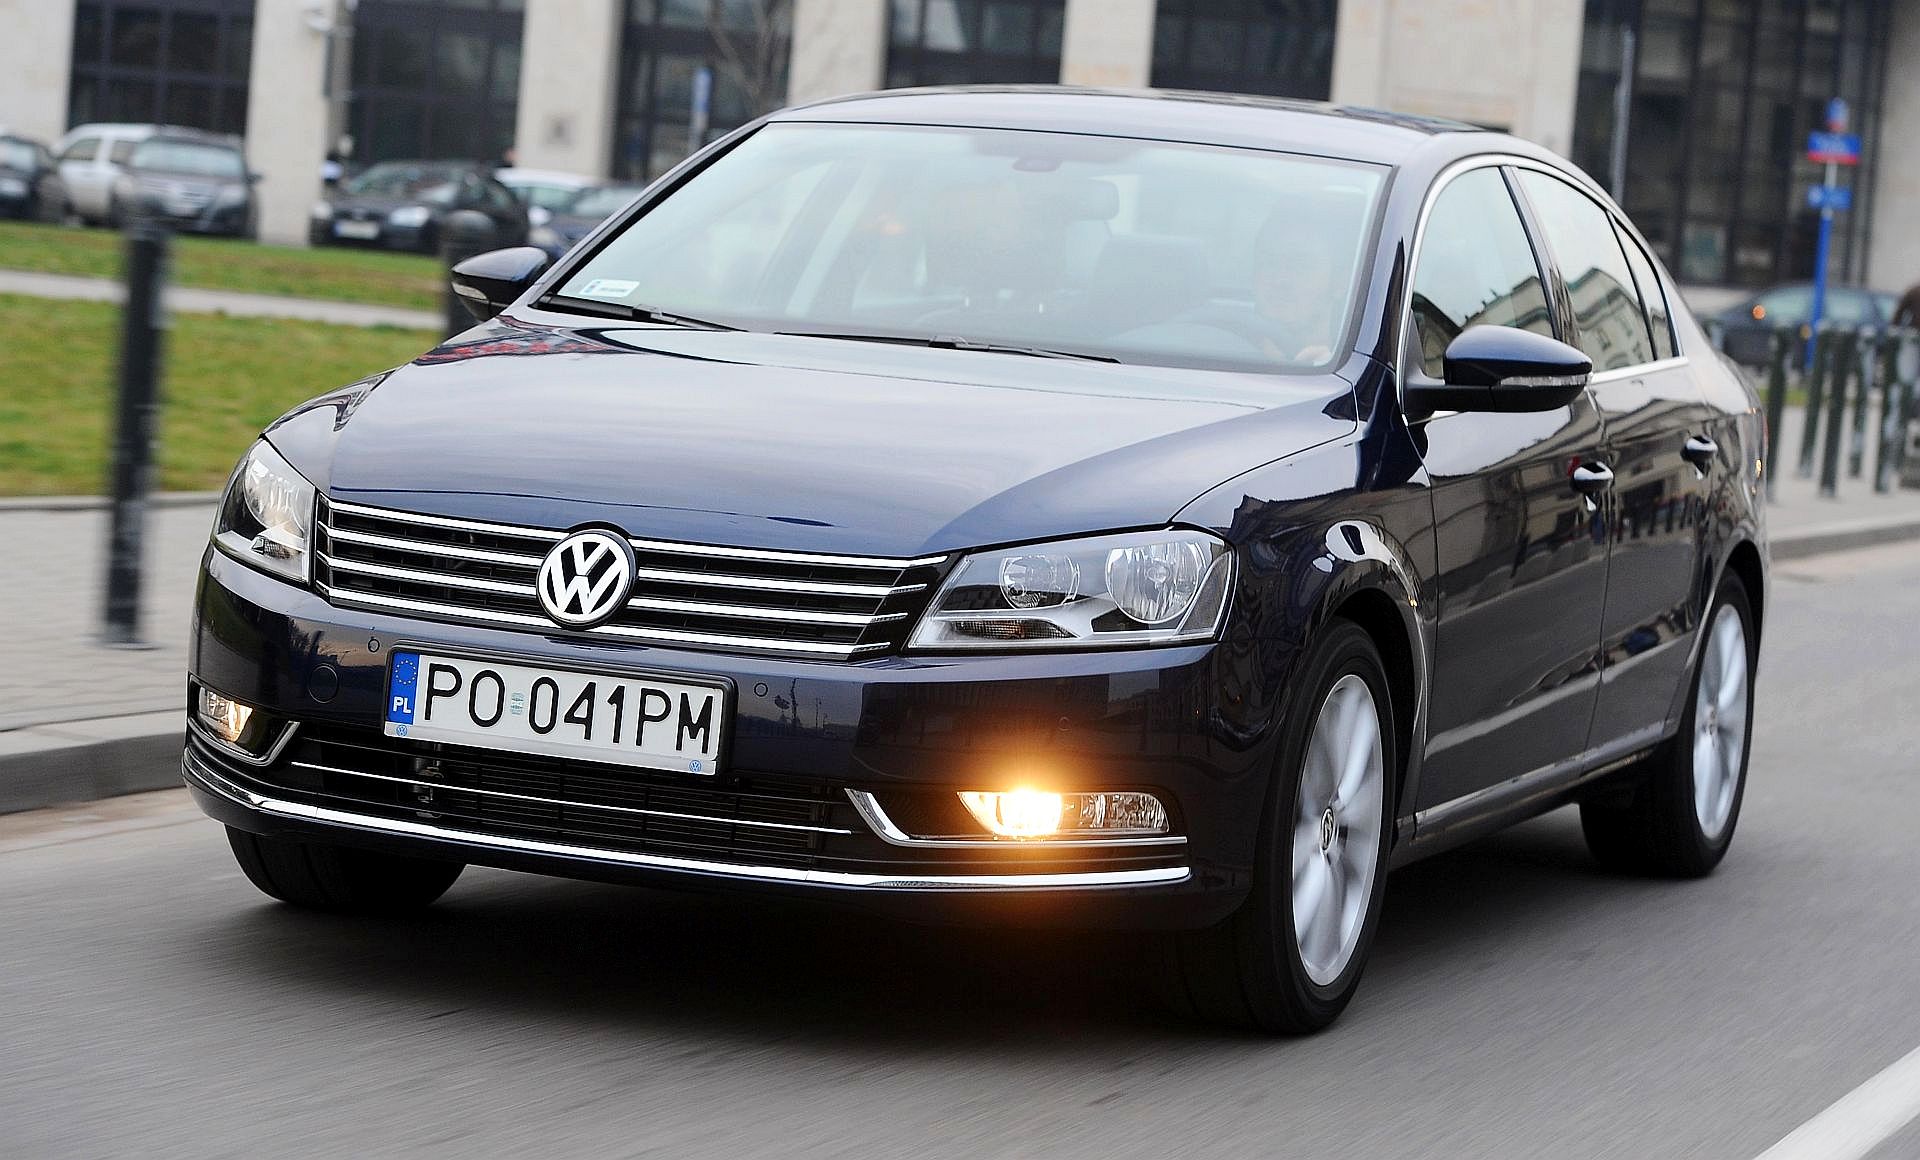 Używany Volkswagen Passat B7 (2010-2014) - opinie, dane techniczne, usterki